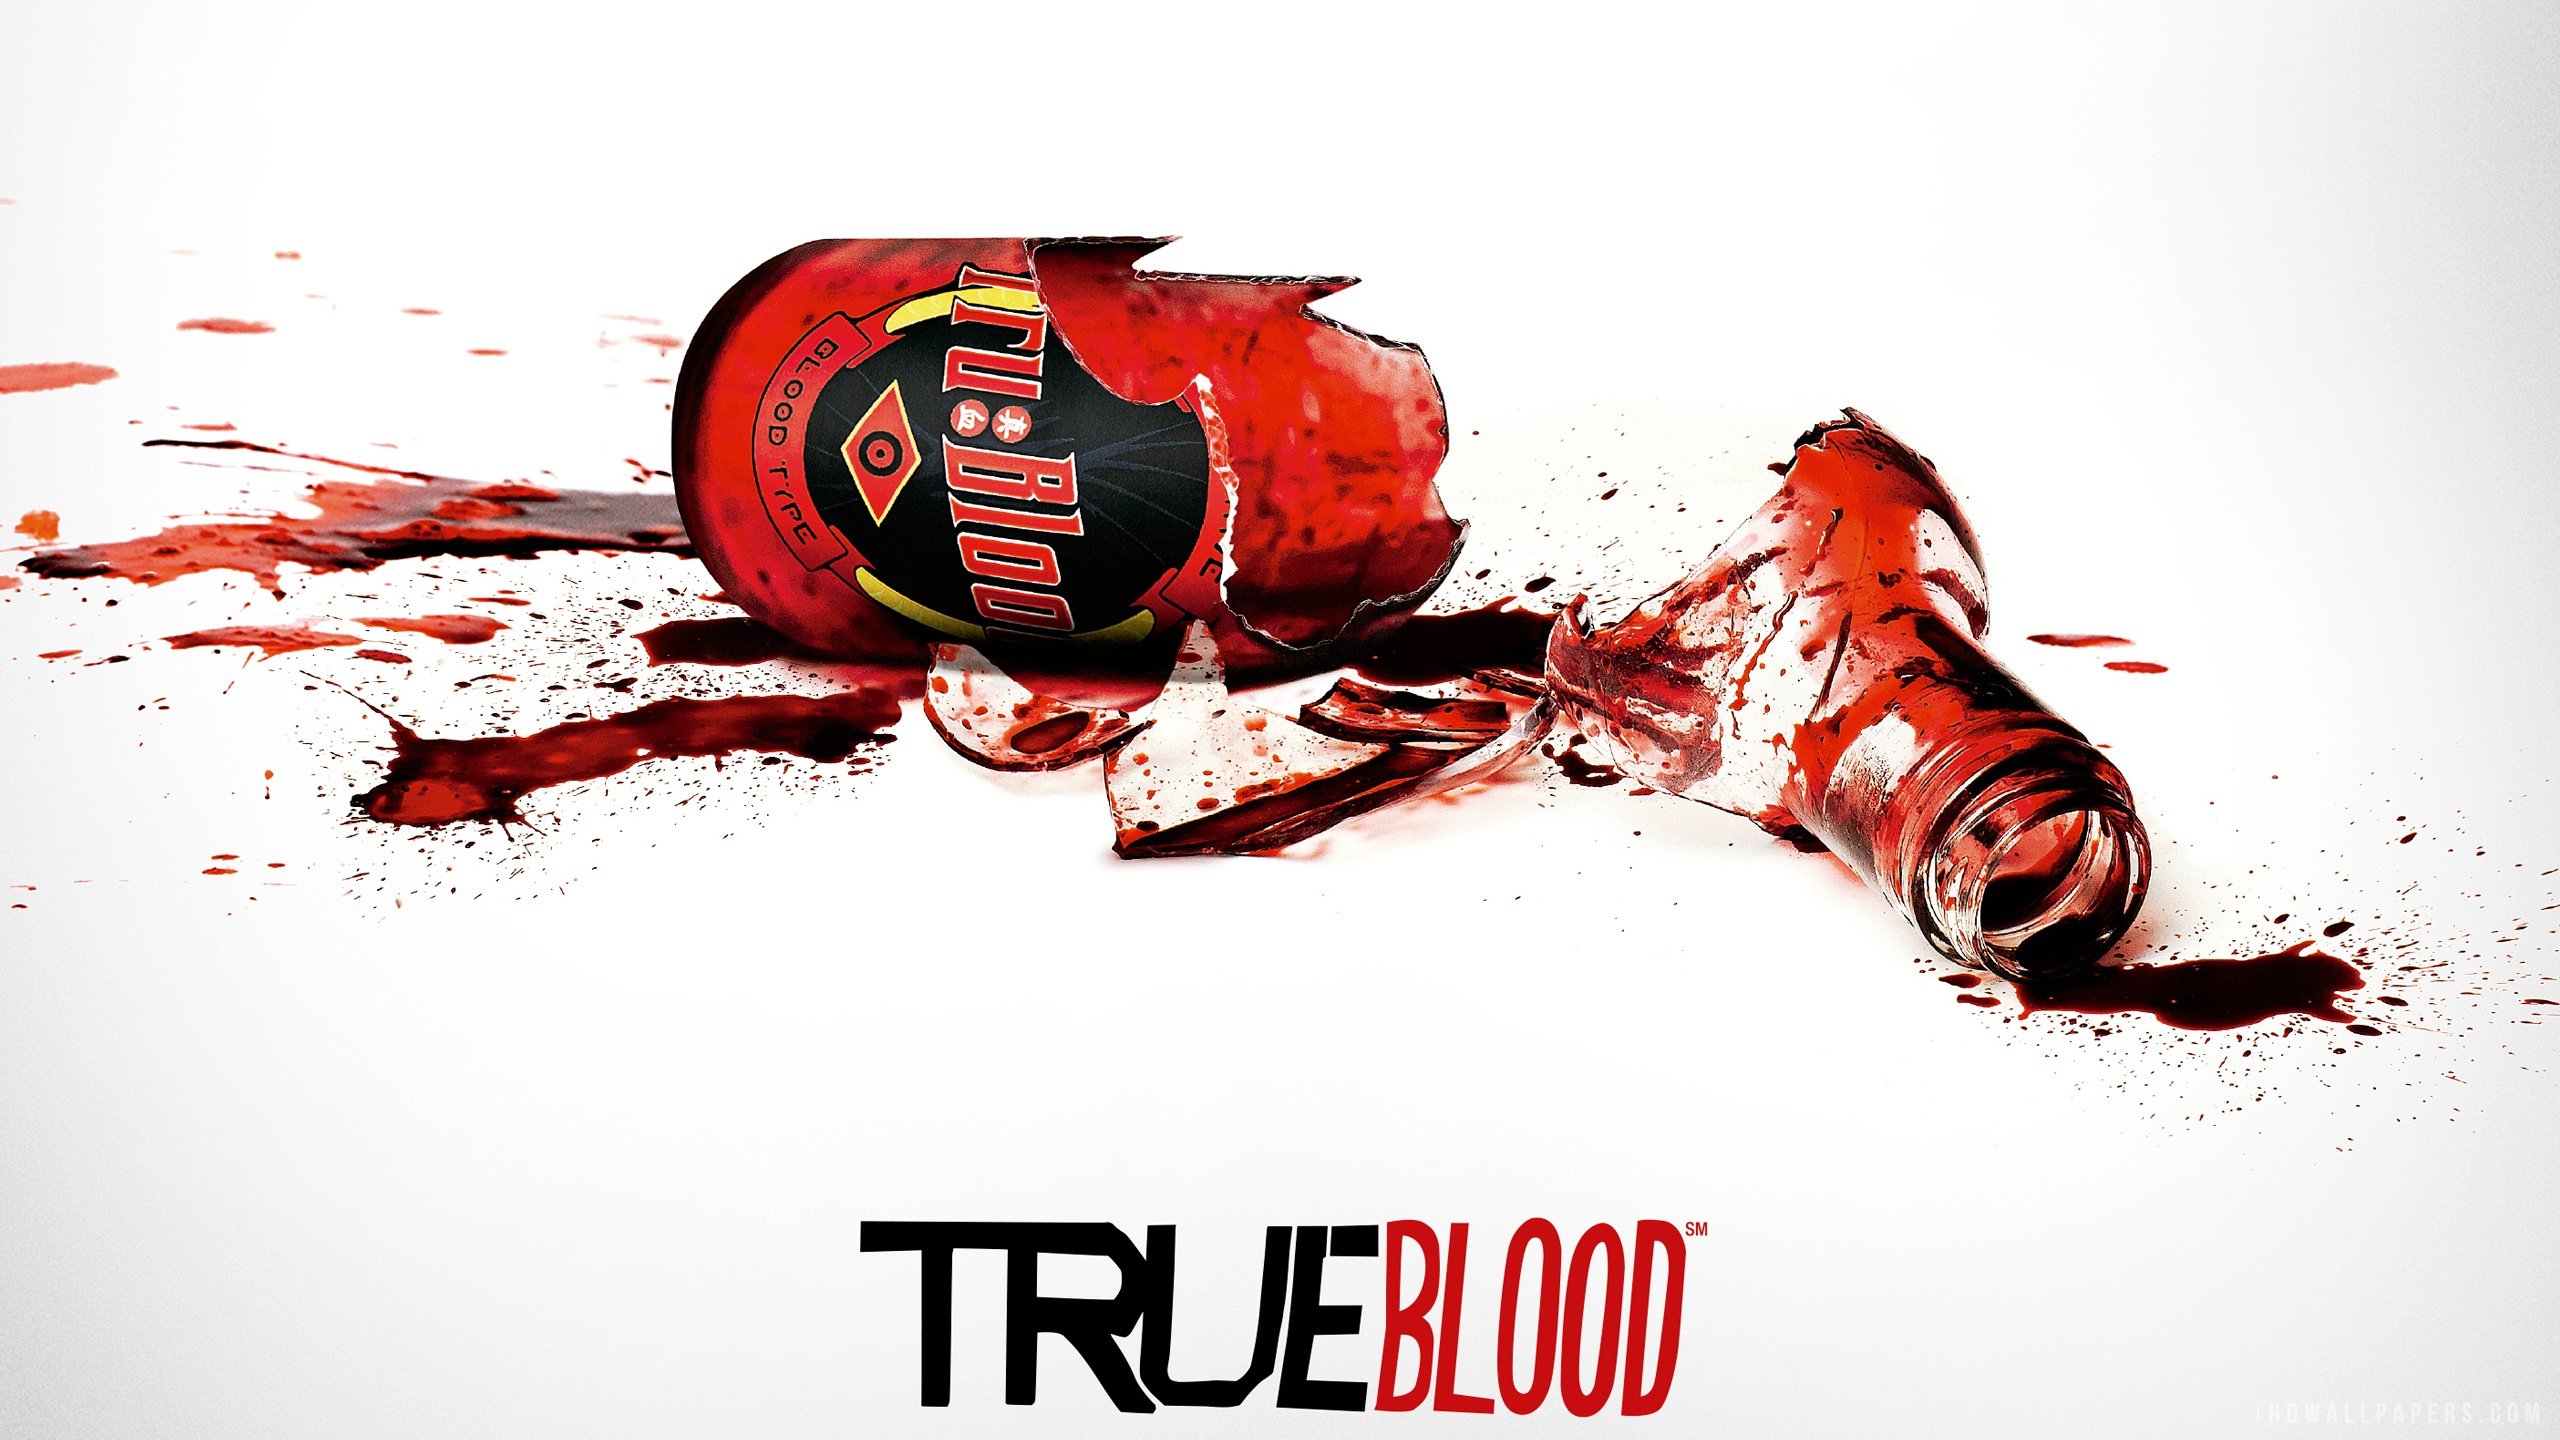 True Blood TV Series 2013 HD Wallpaper   iHD Wallpapers